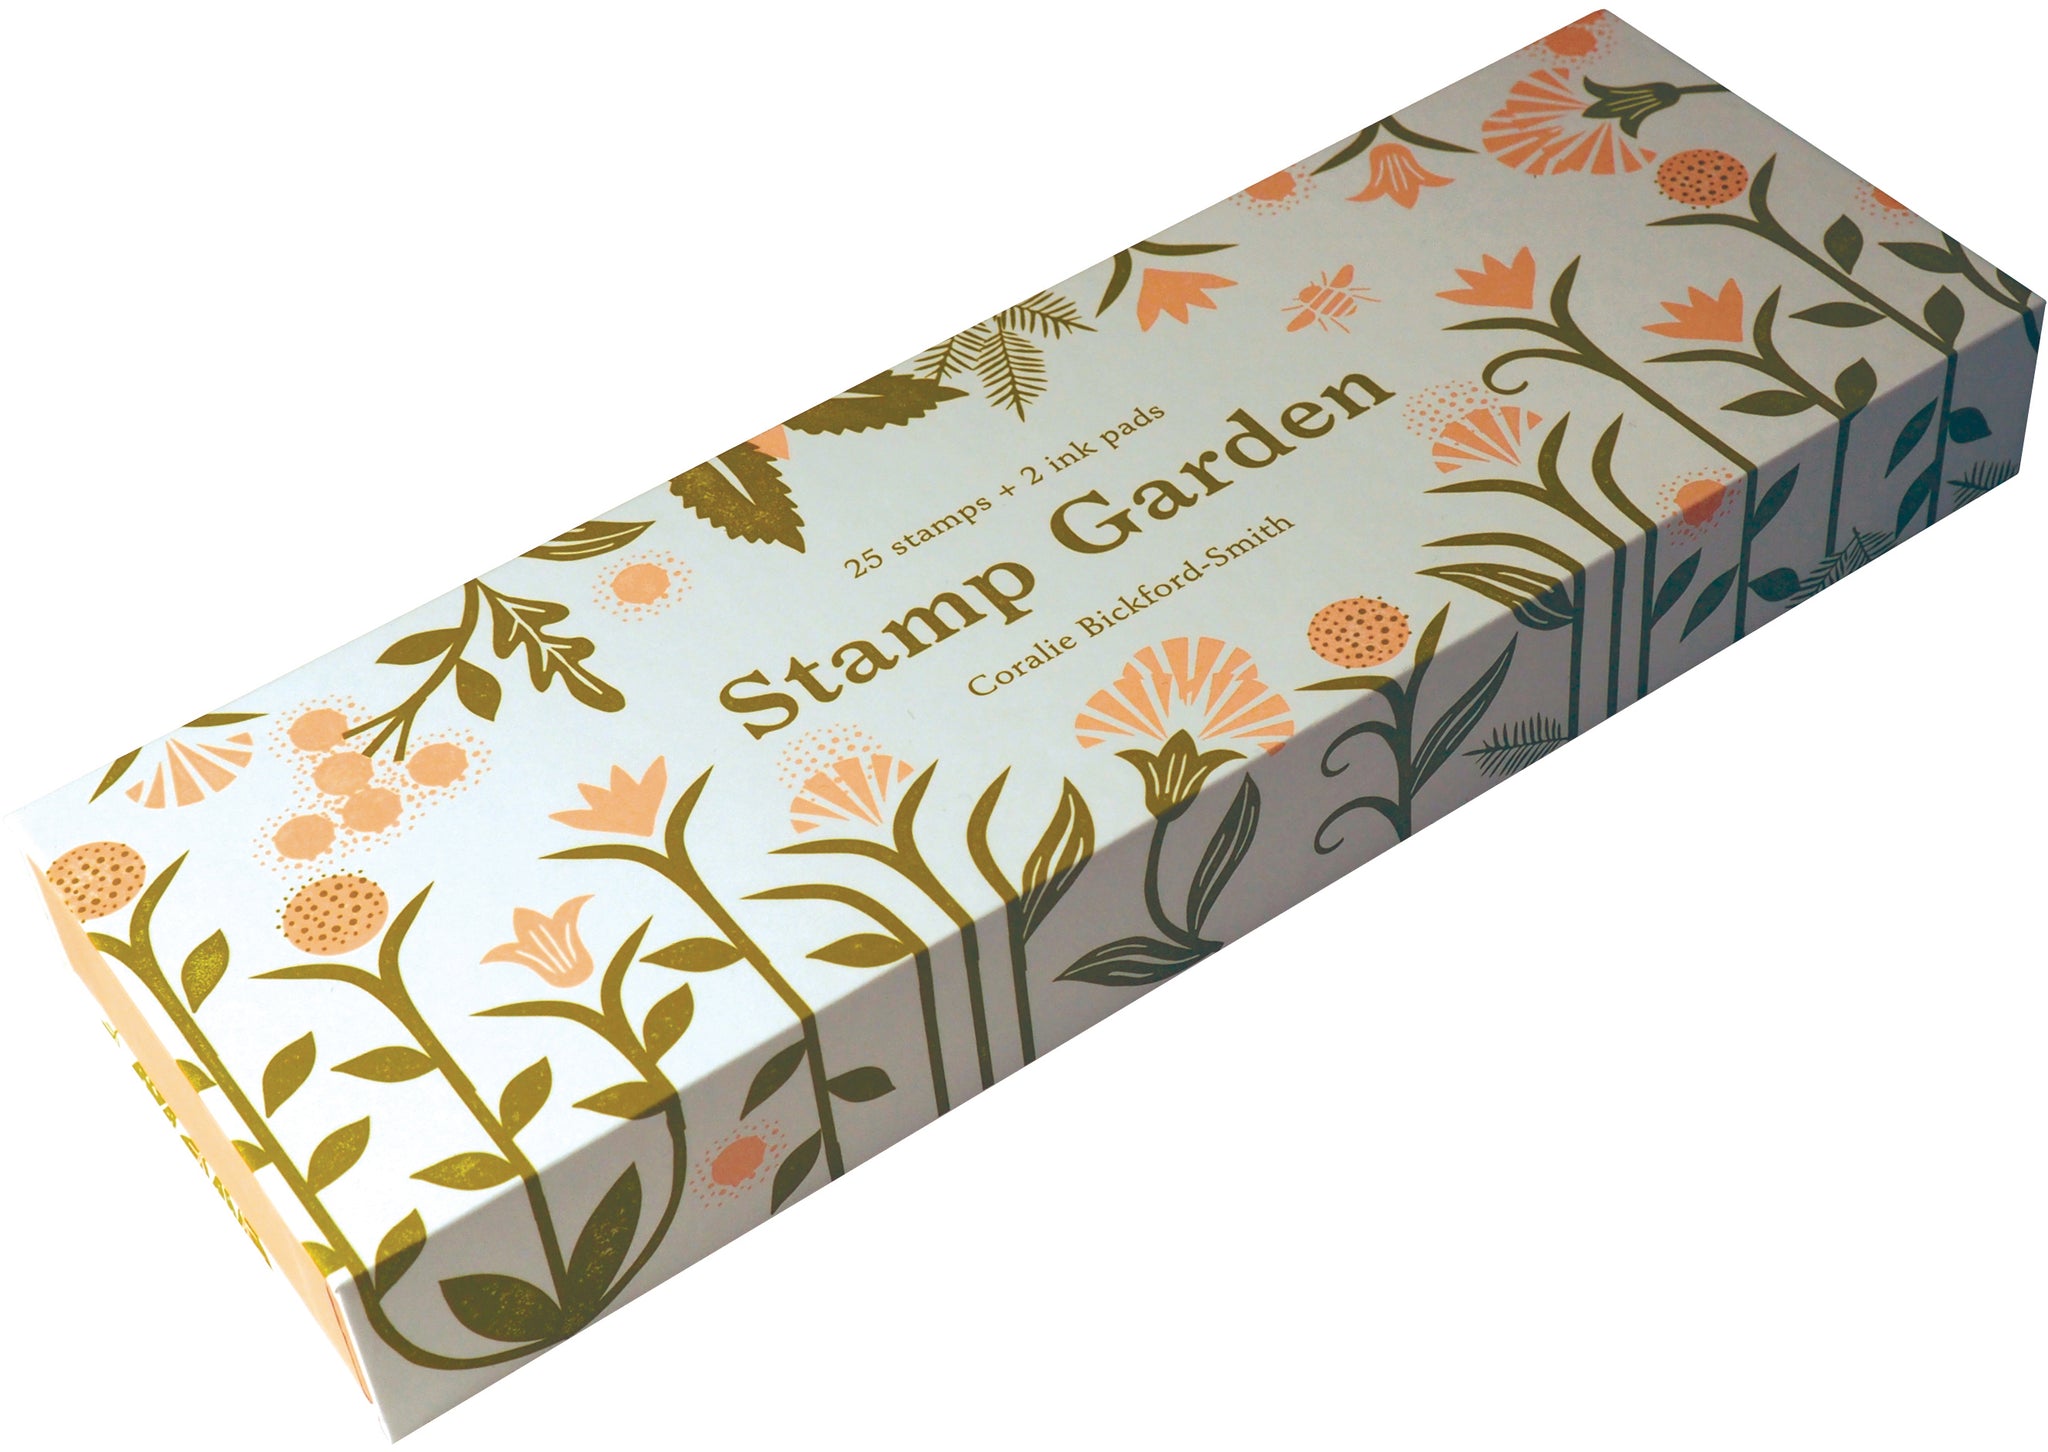 Stamp Garden cover